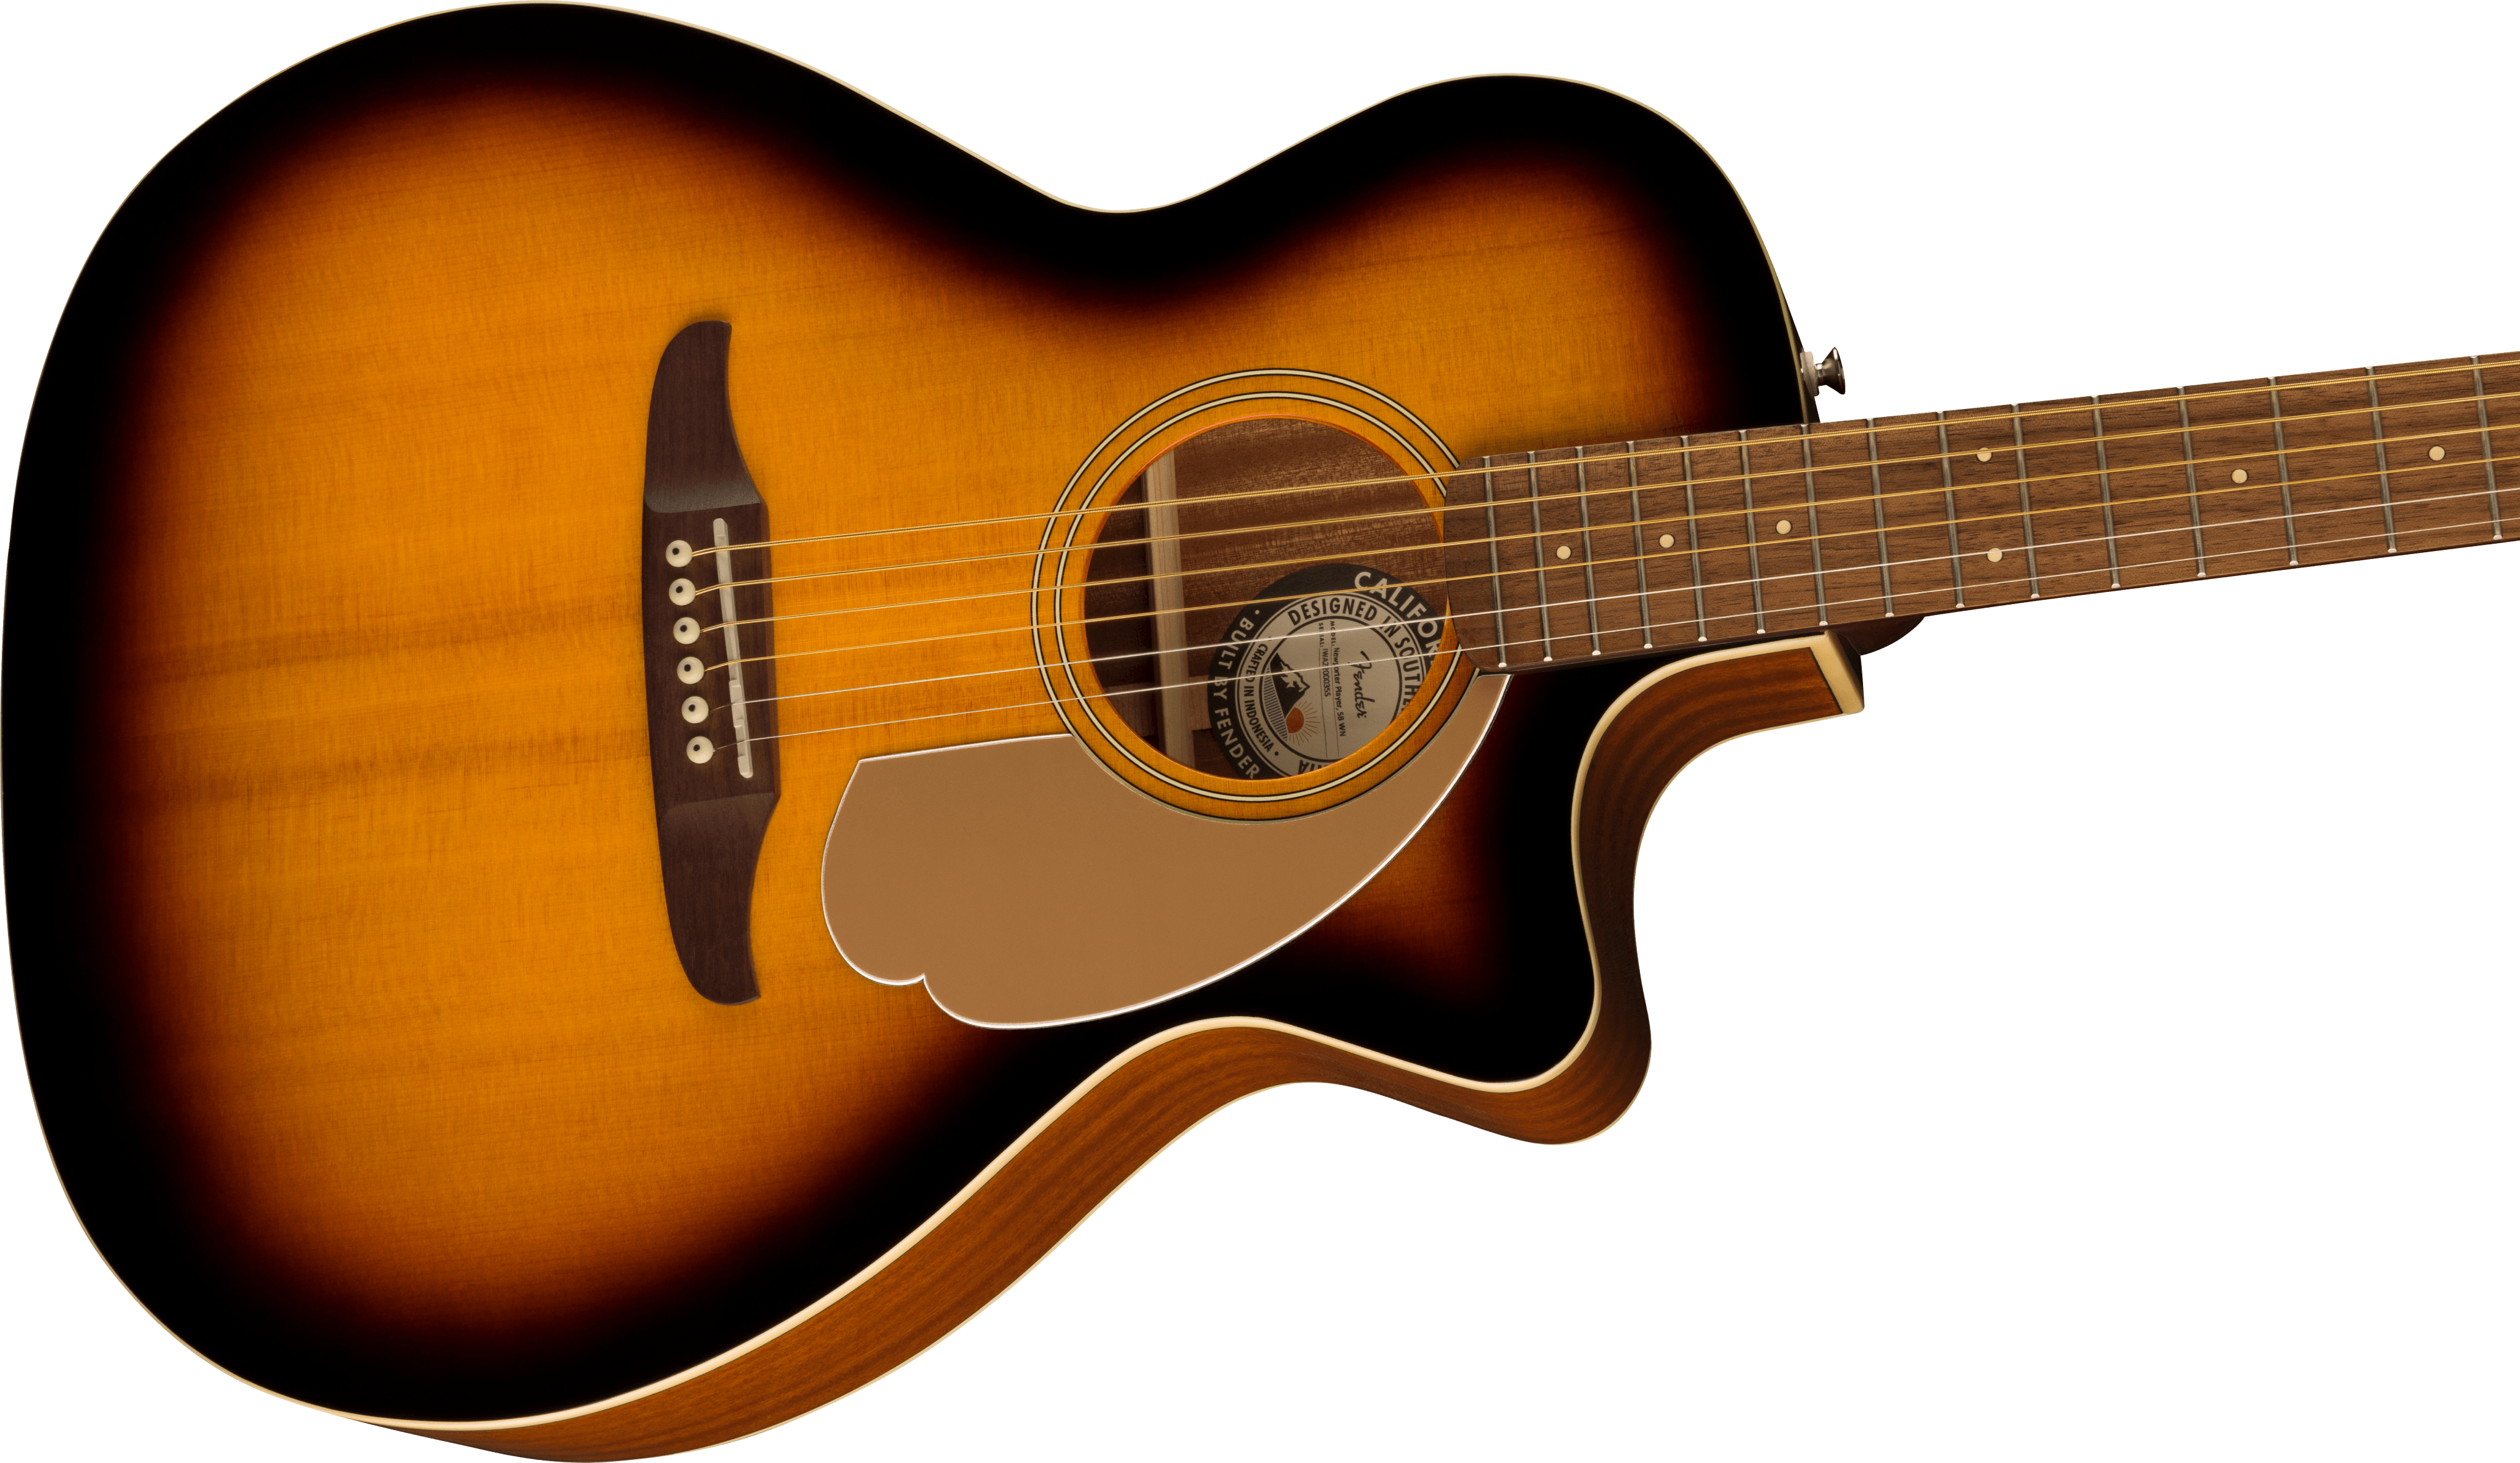 Fender Newporter Player, Walnut Fingerboard, Gold Pickguard, Sunburst